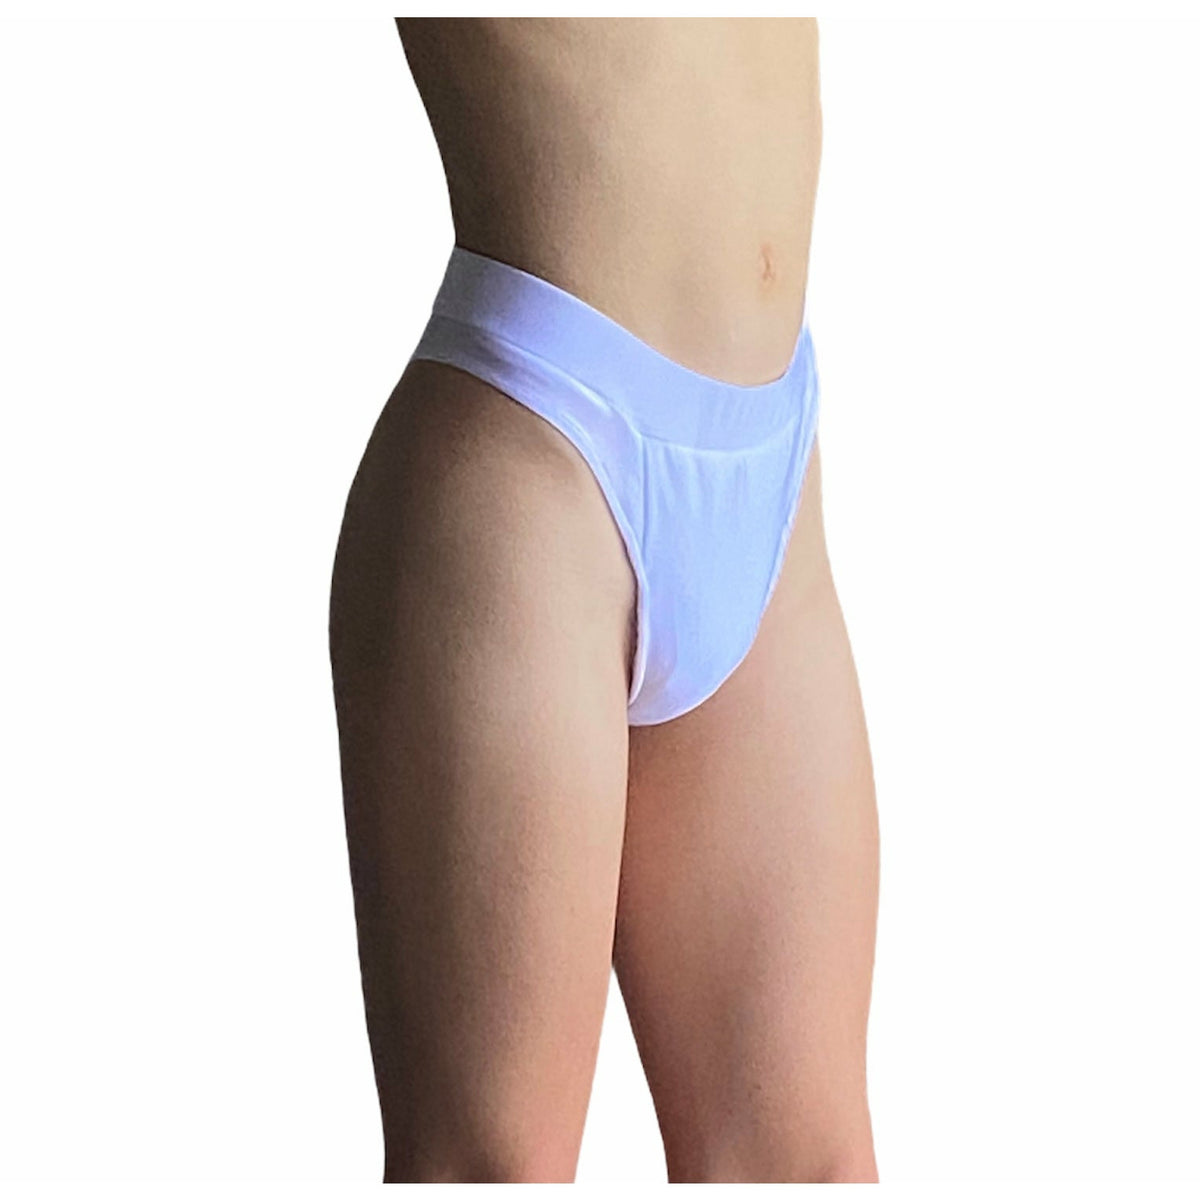 Transwoman underwear - Thongs - My Sexual Health